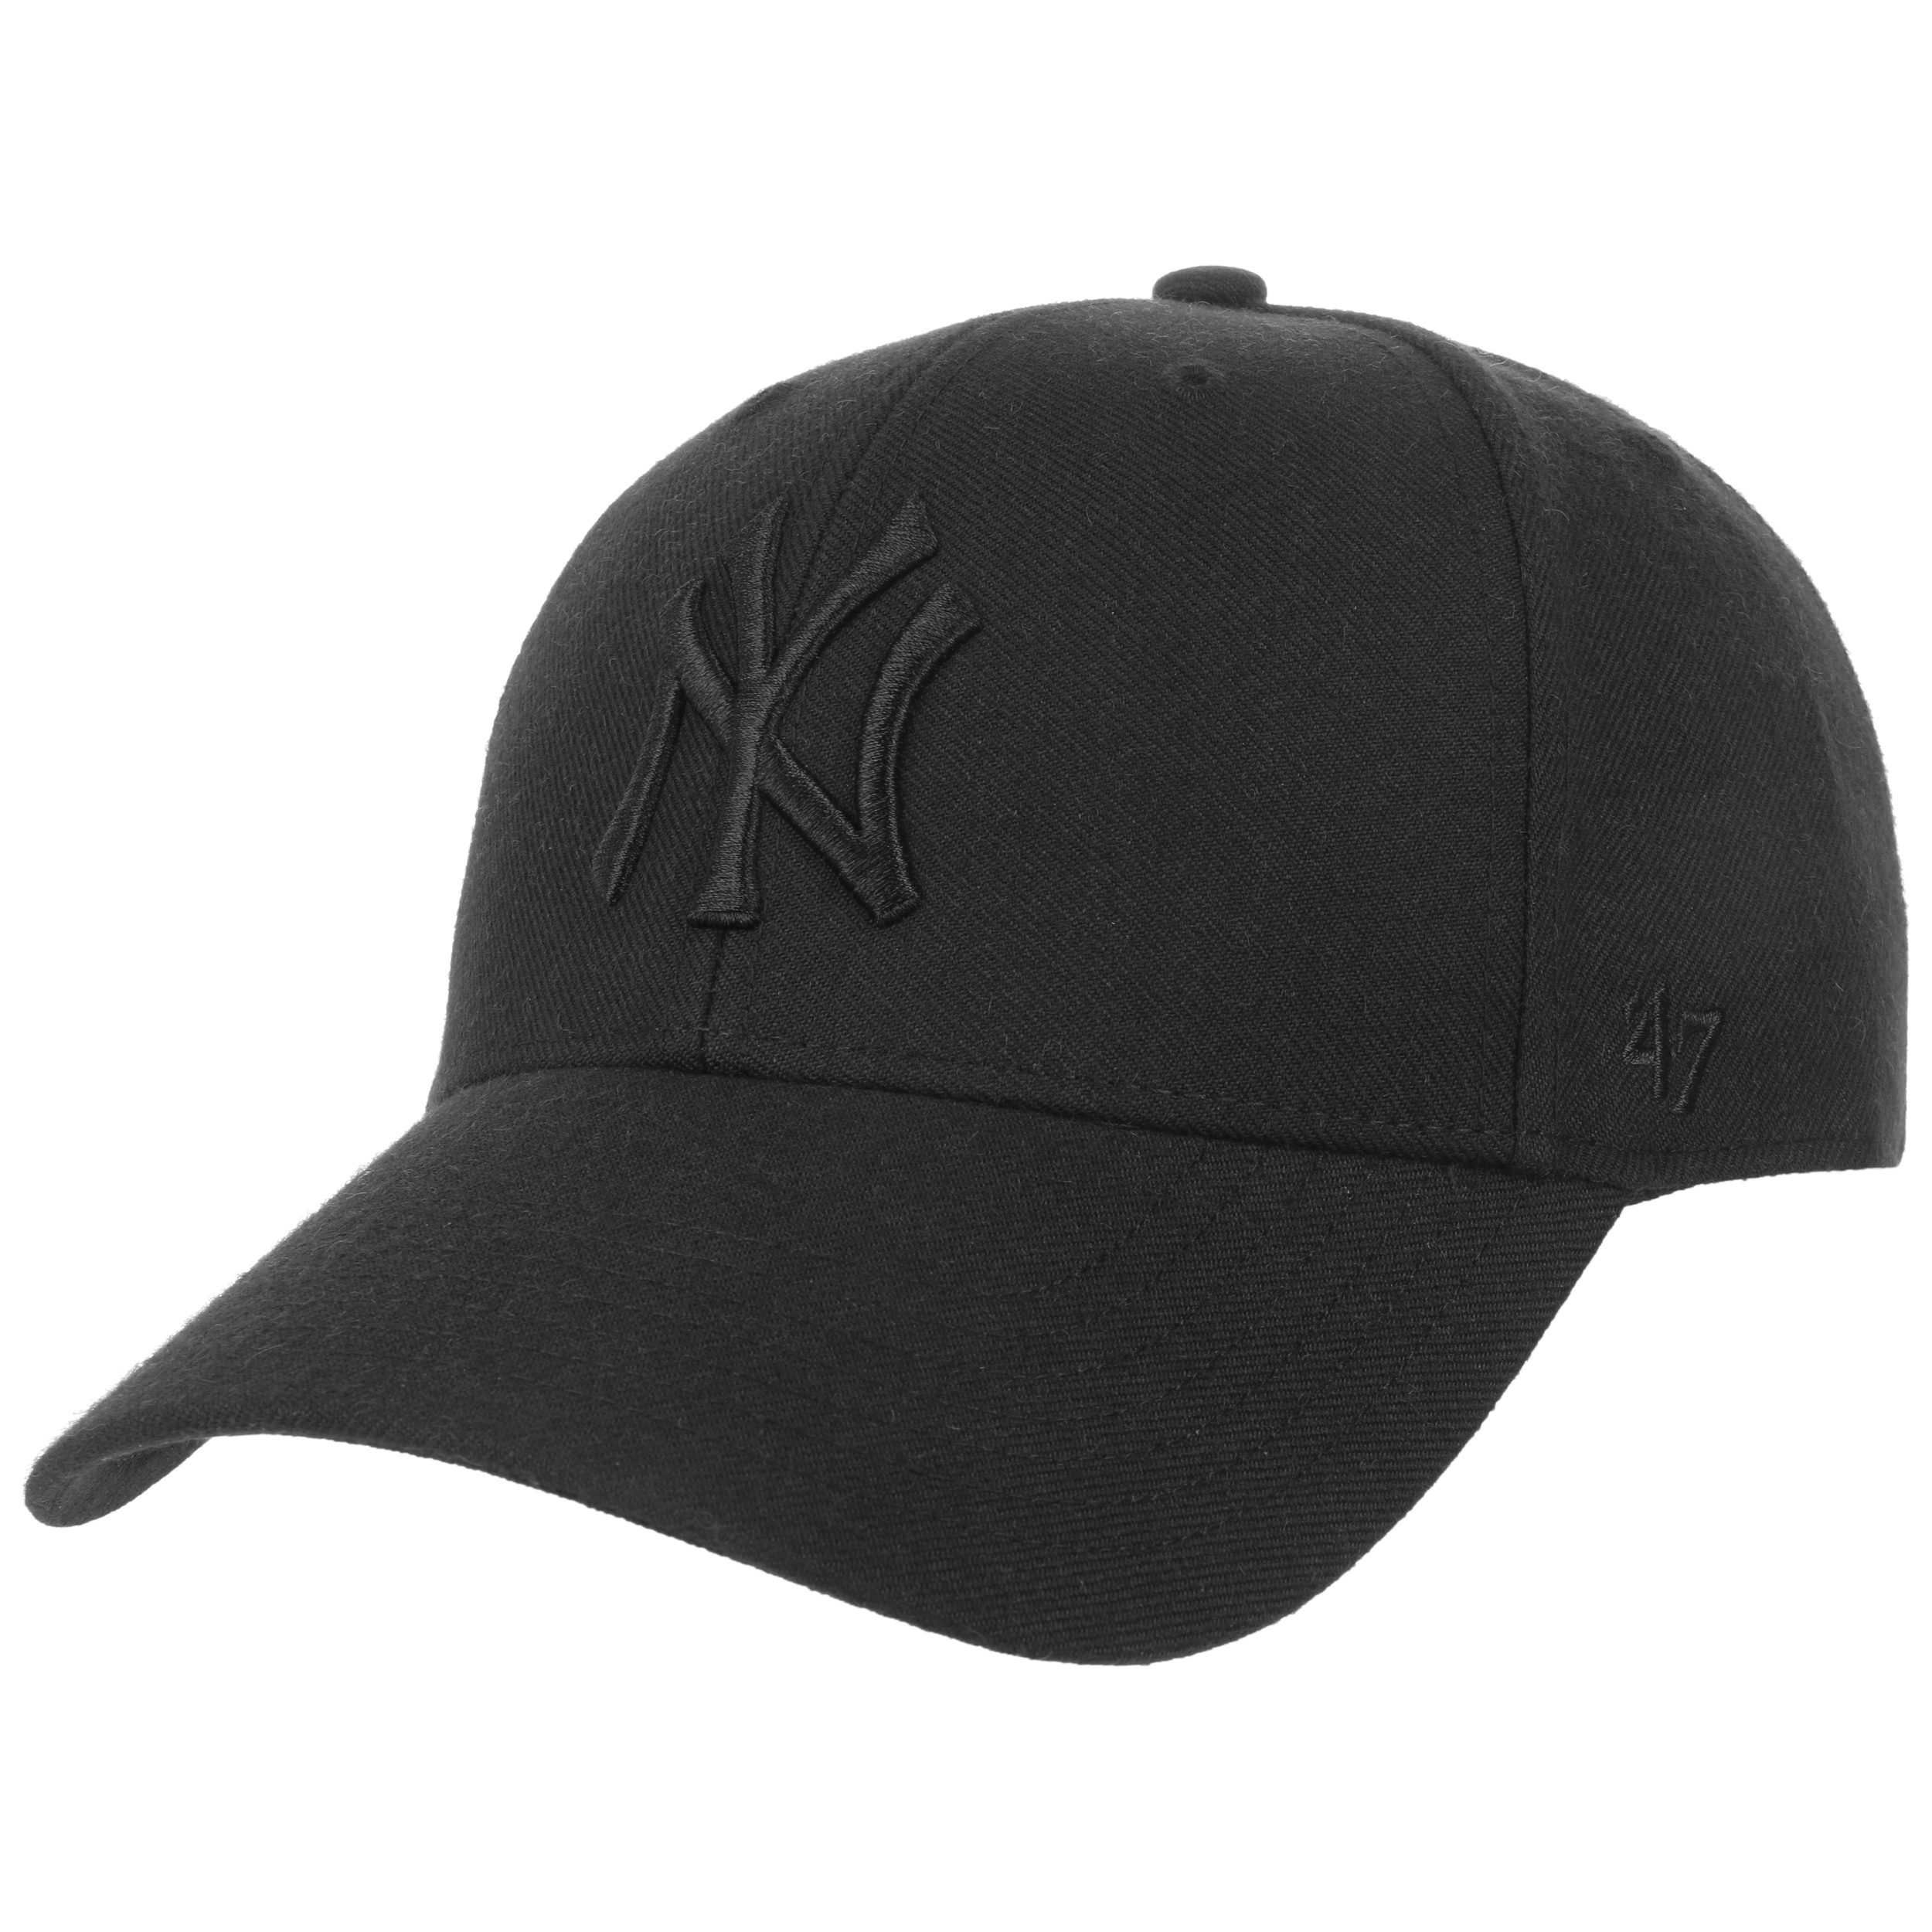 MLB Yankees Sure Shot Snapback Cap by 47 Brand